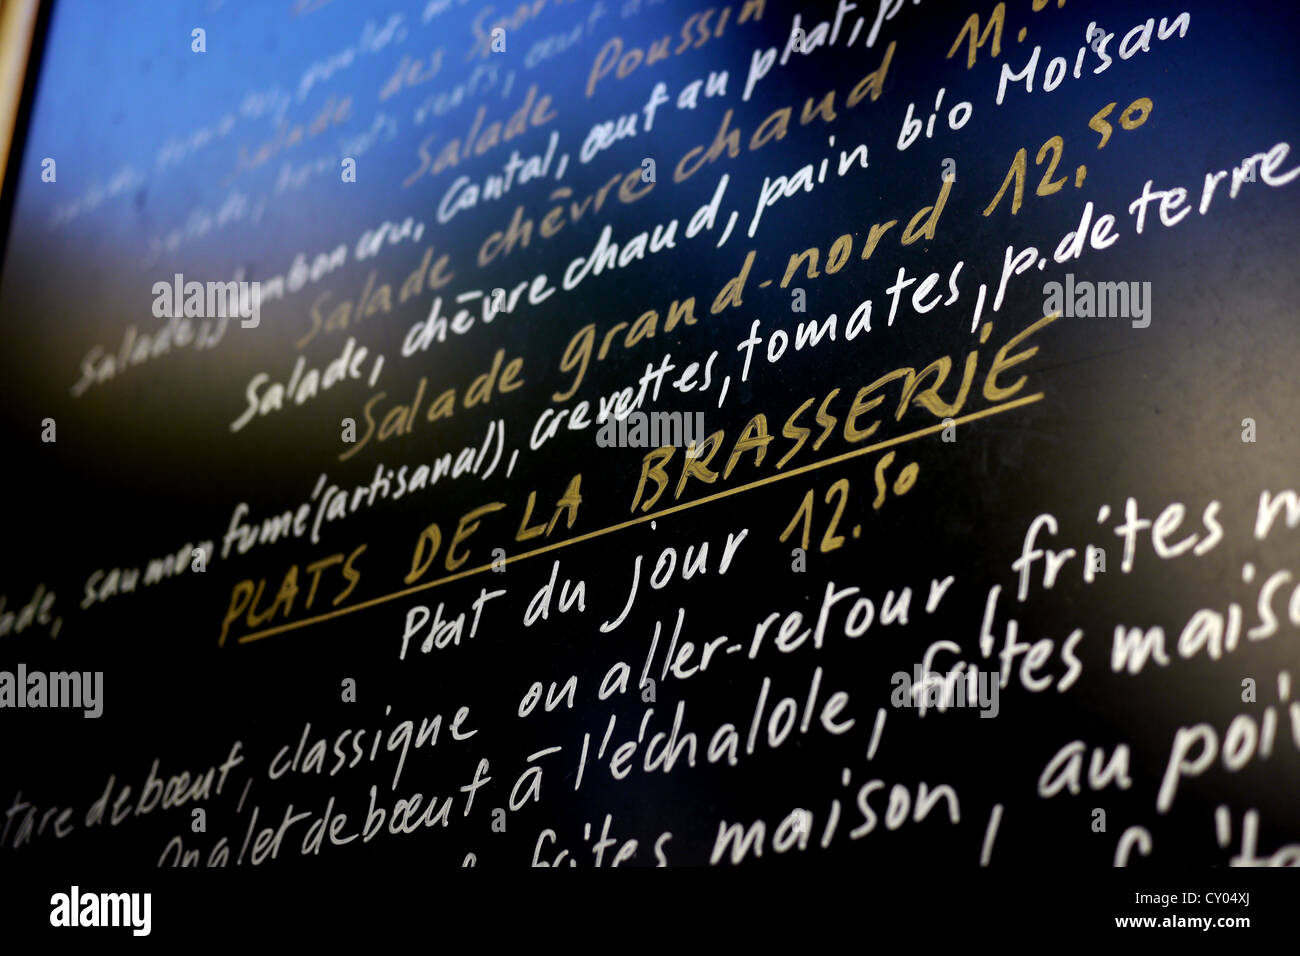 french menu board Stock Photo